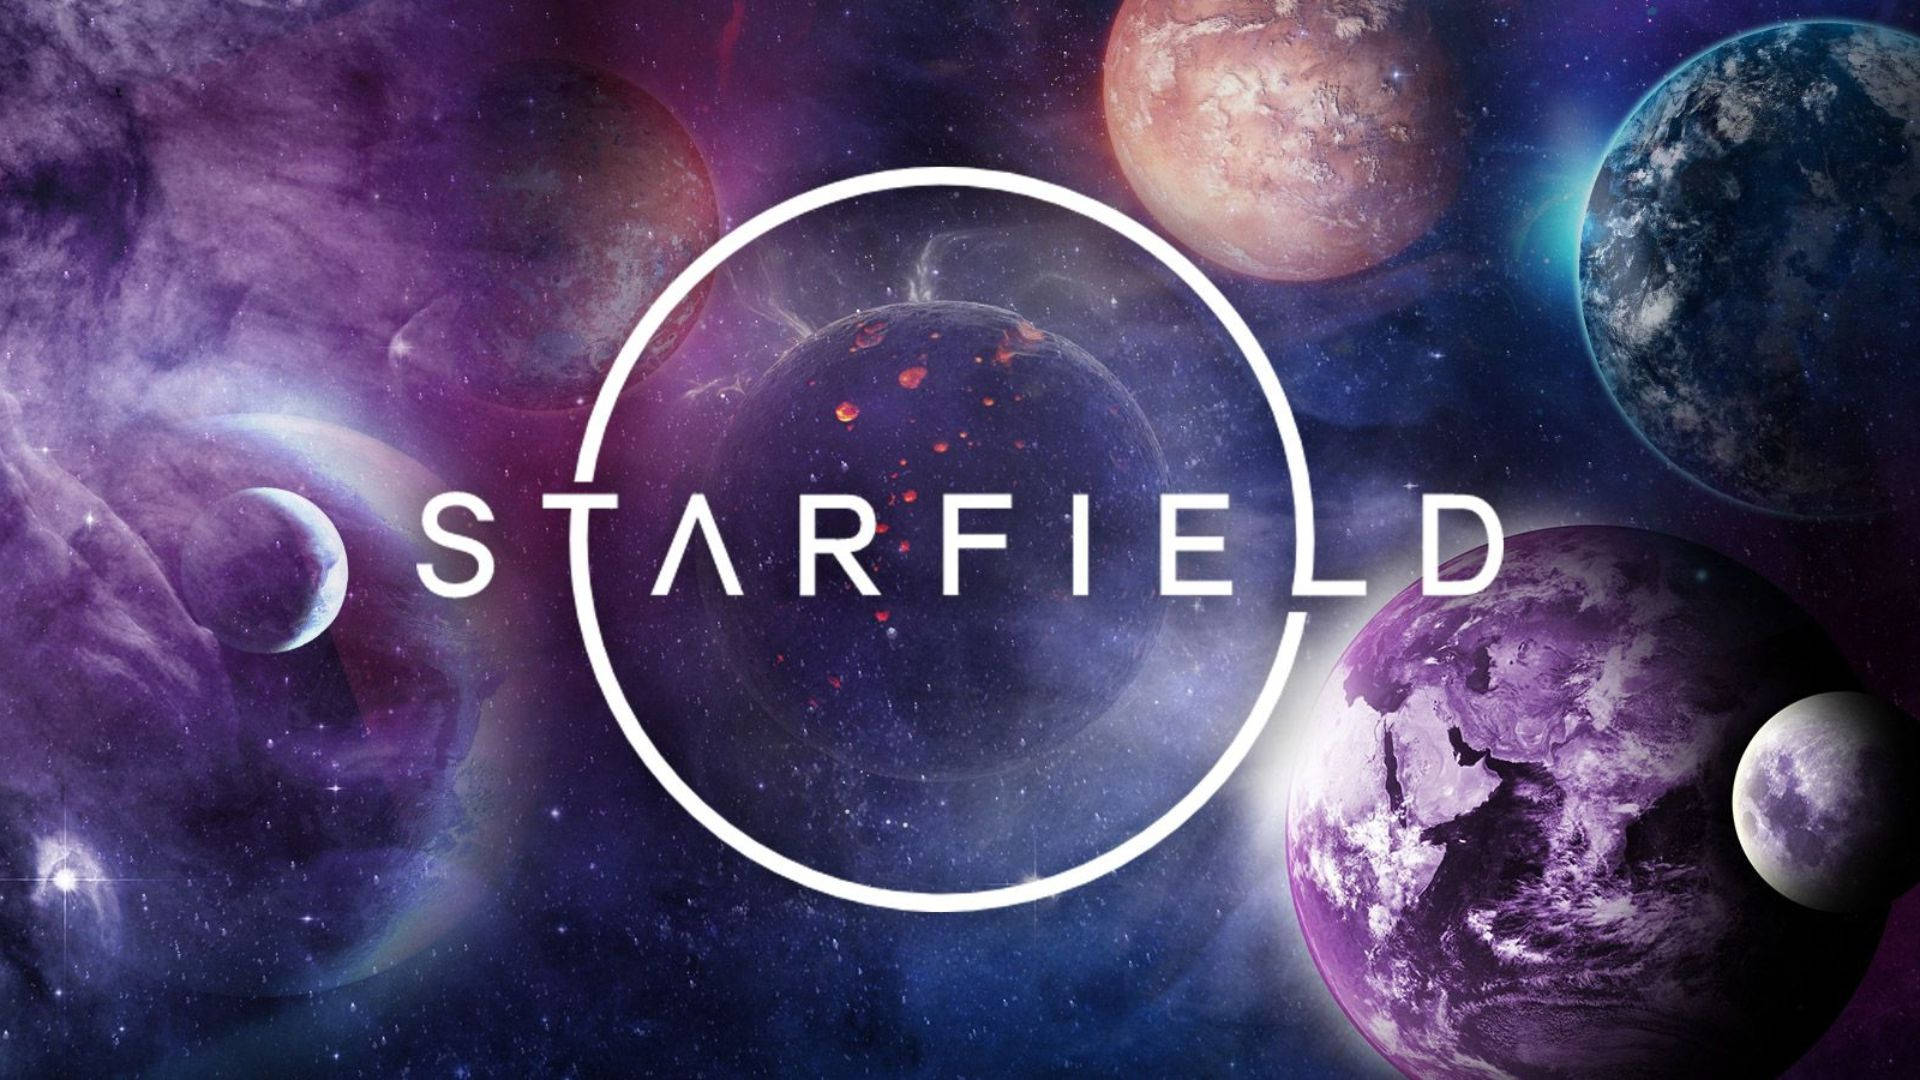 Free Starfield Wallpaper Downloads, Starfield Wallpaper for FREE